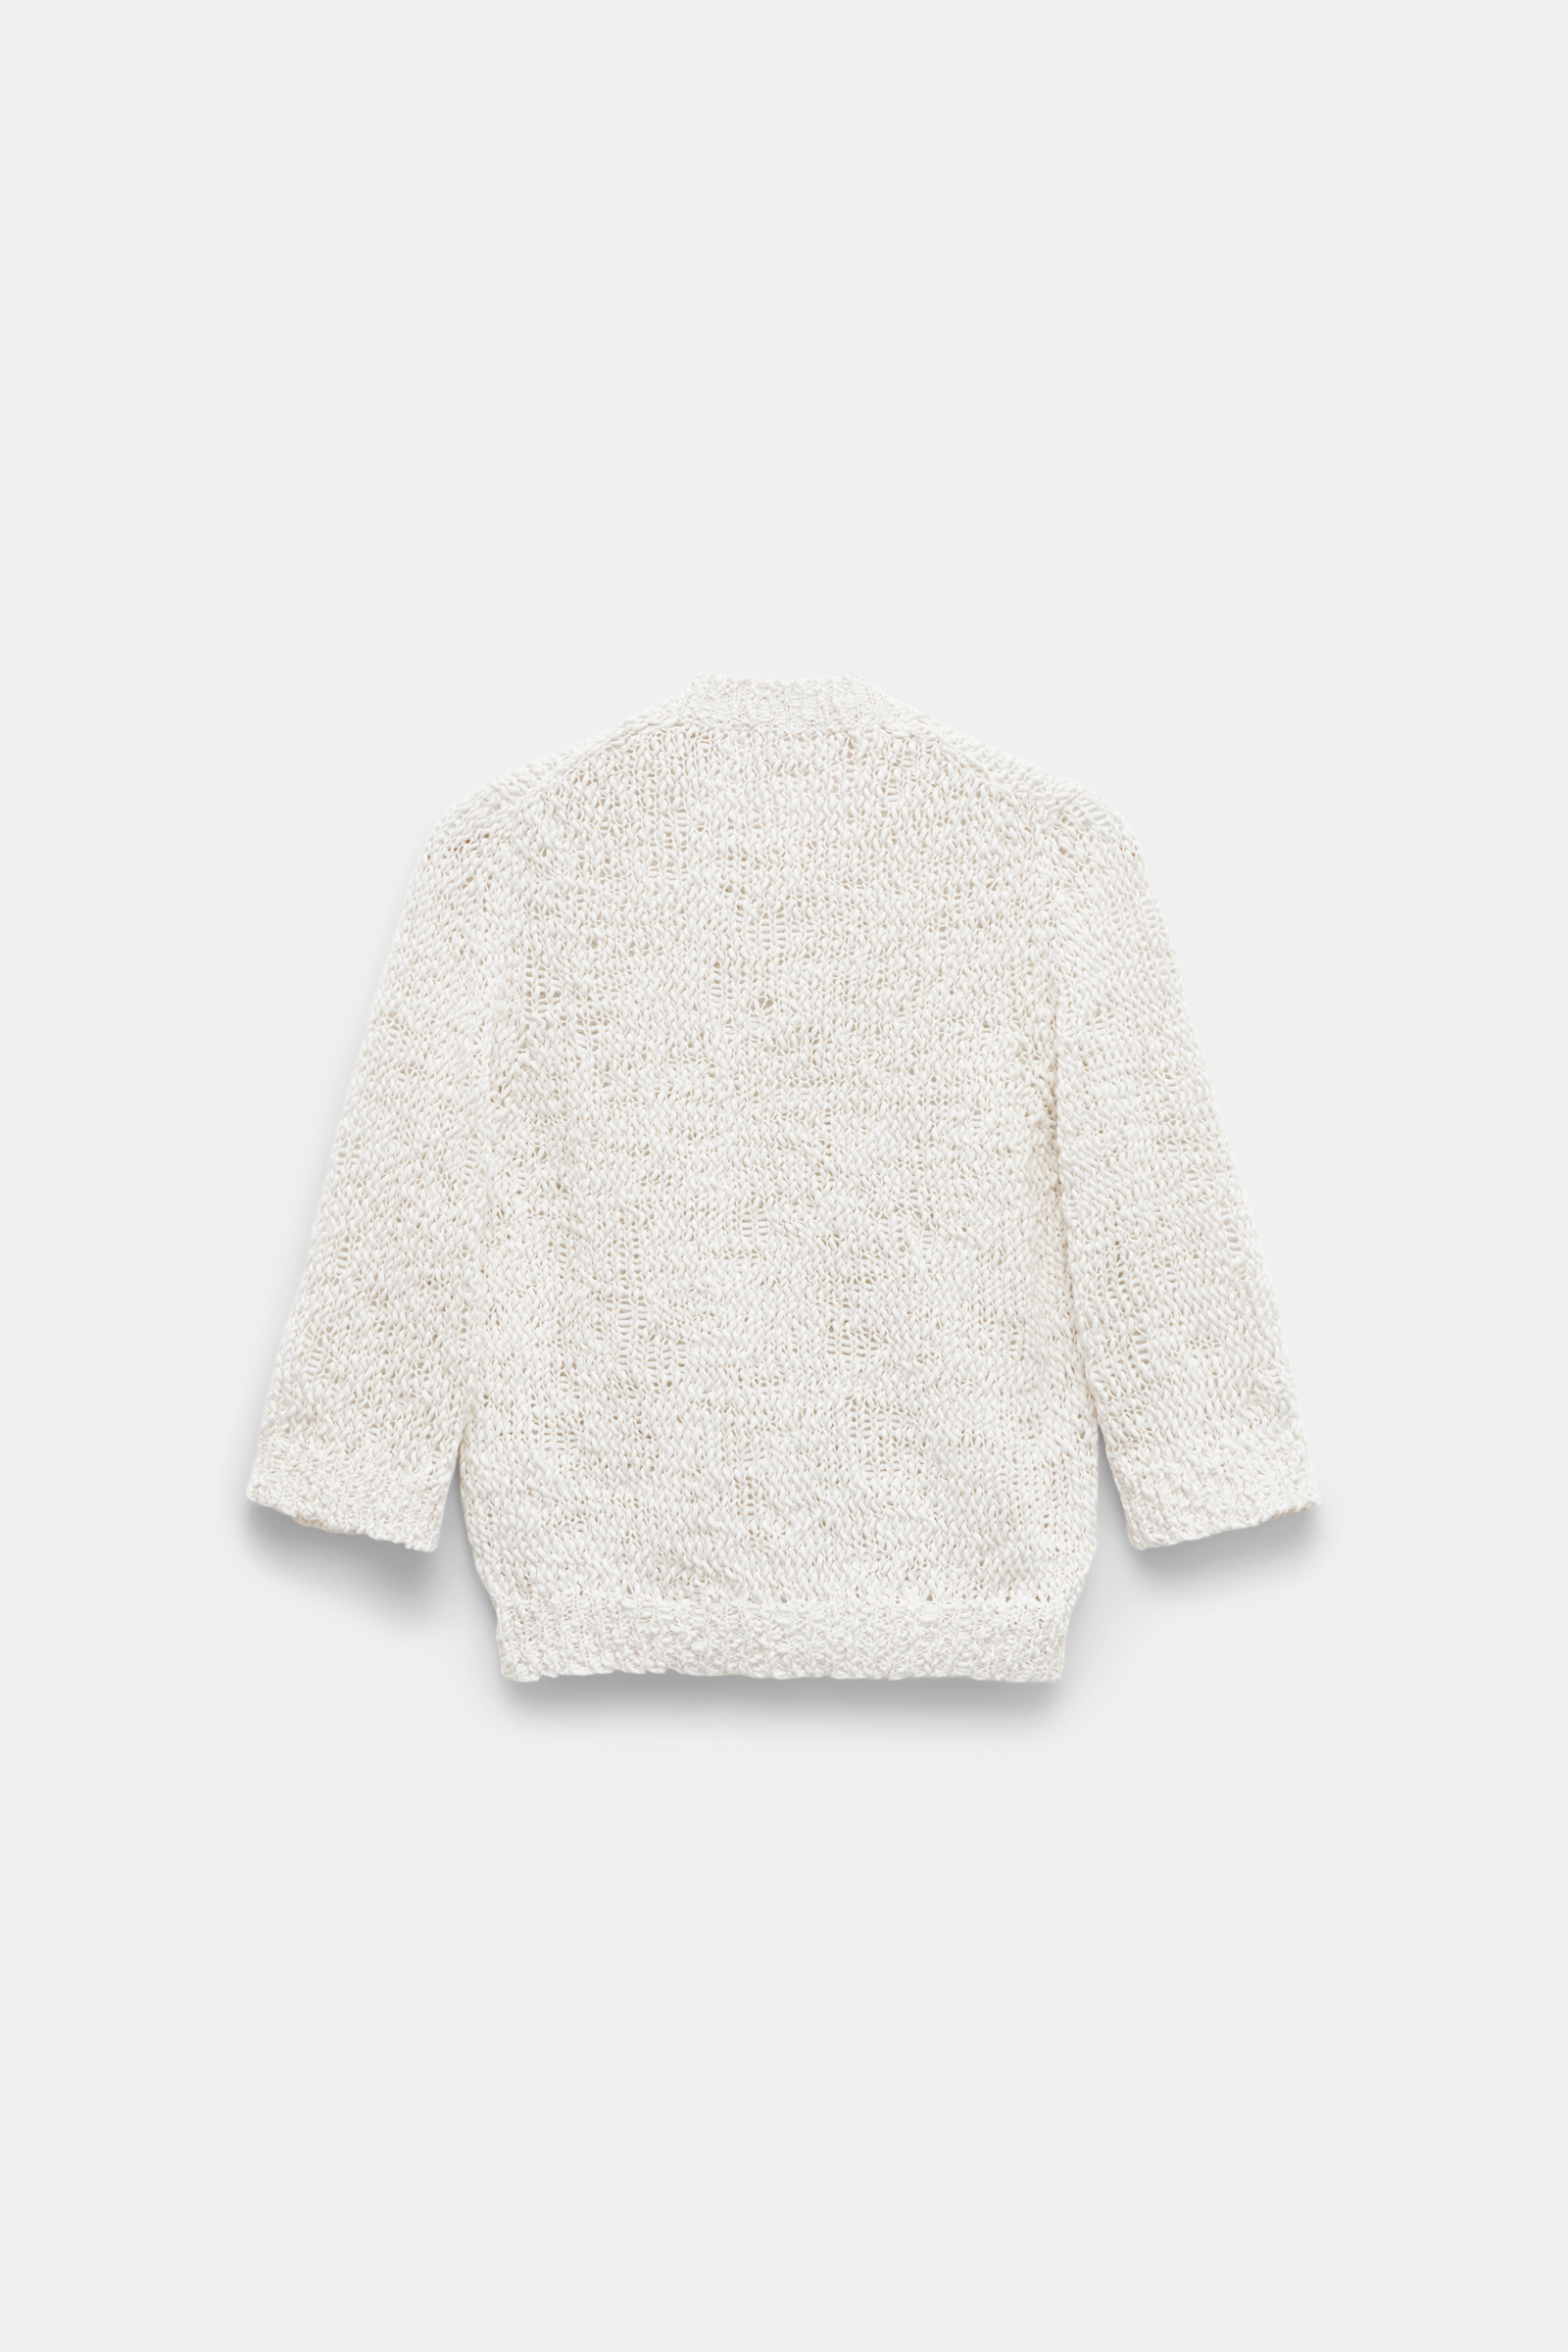 Dorothee Schumacher Textural knit cotton cardigan camellia white